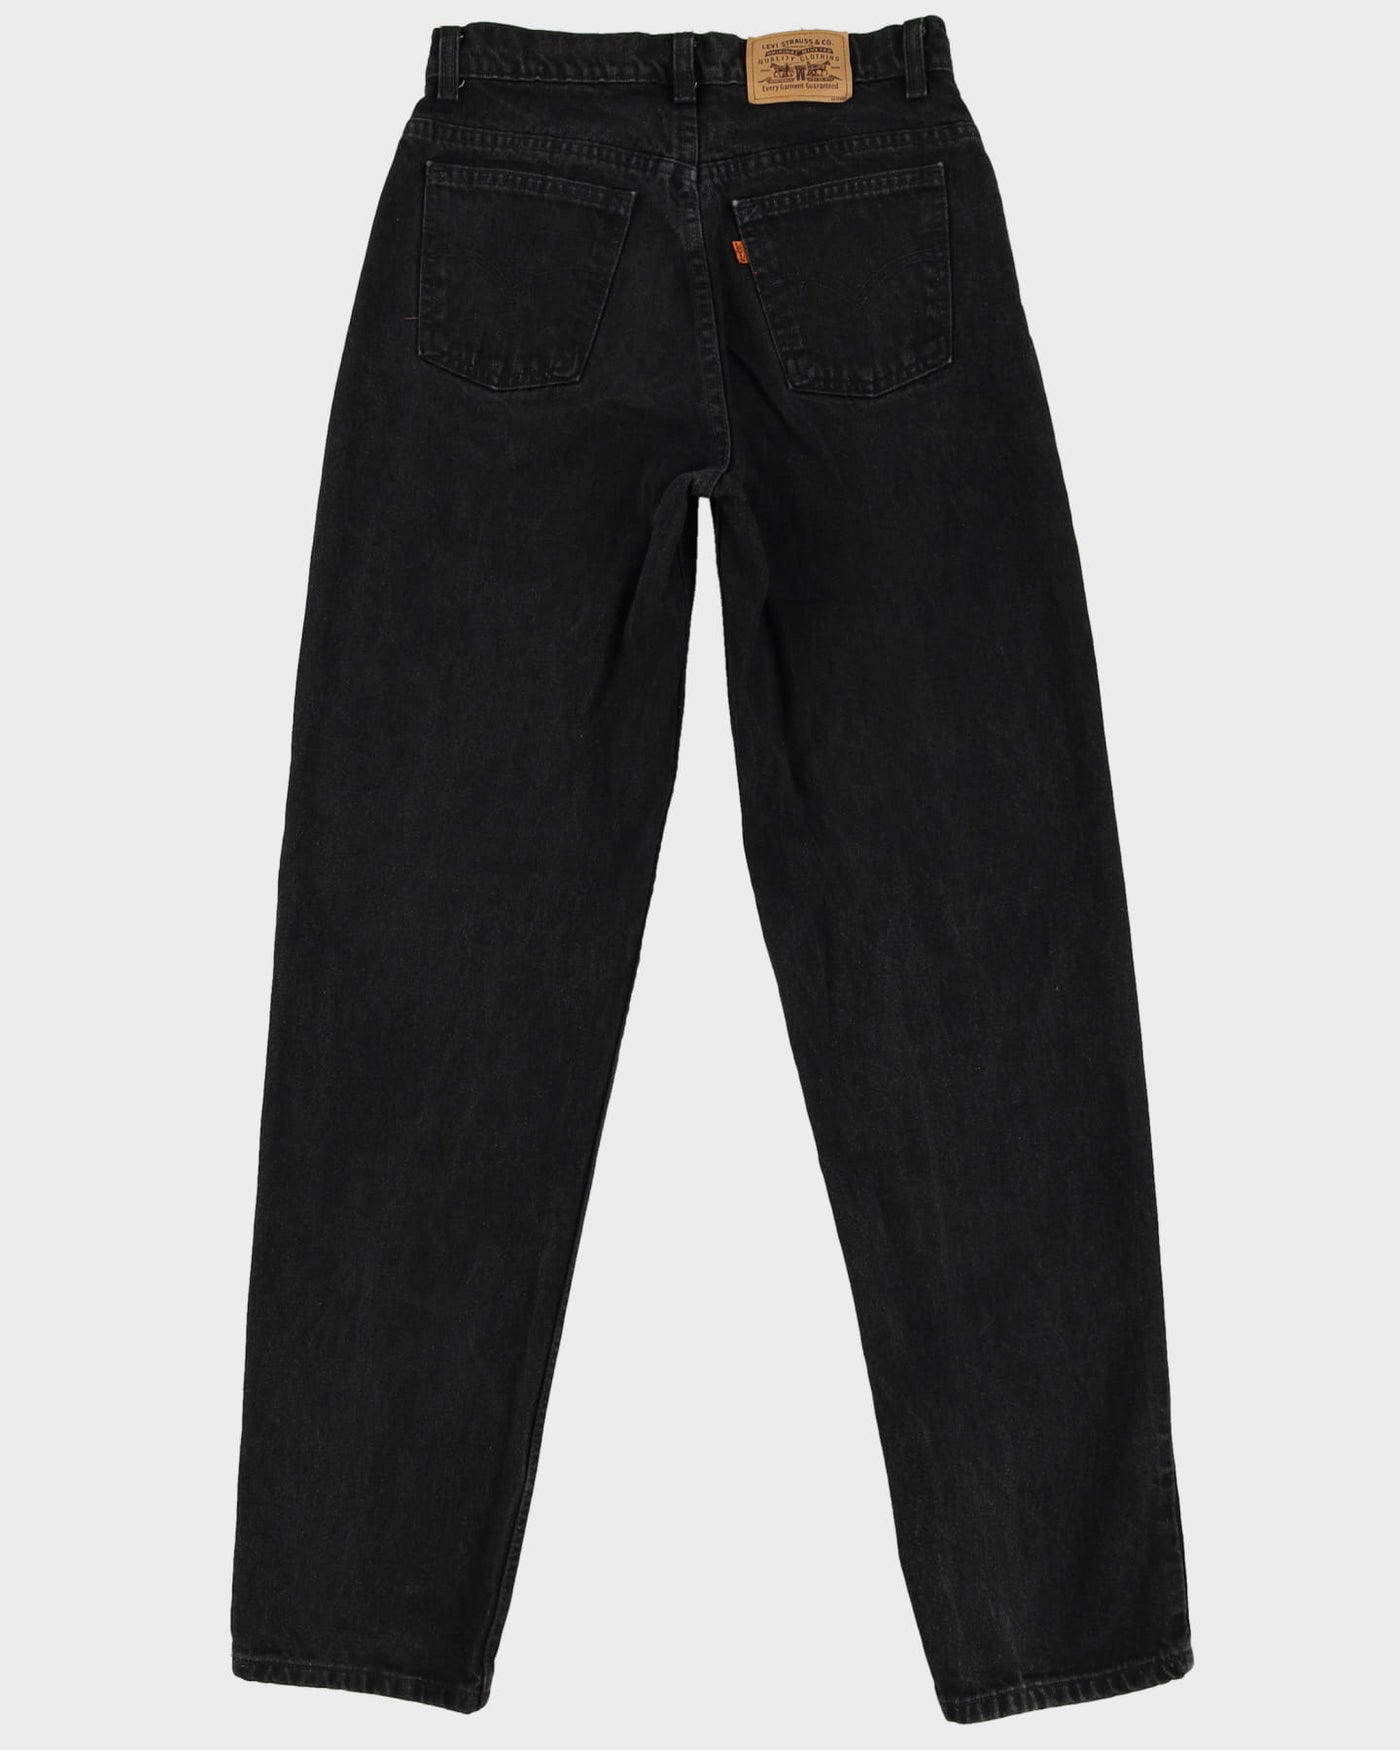 Vintage 90s Levi's Orange Tab Dark Wash Black Jeans - W29 L34